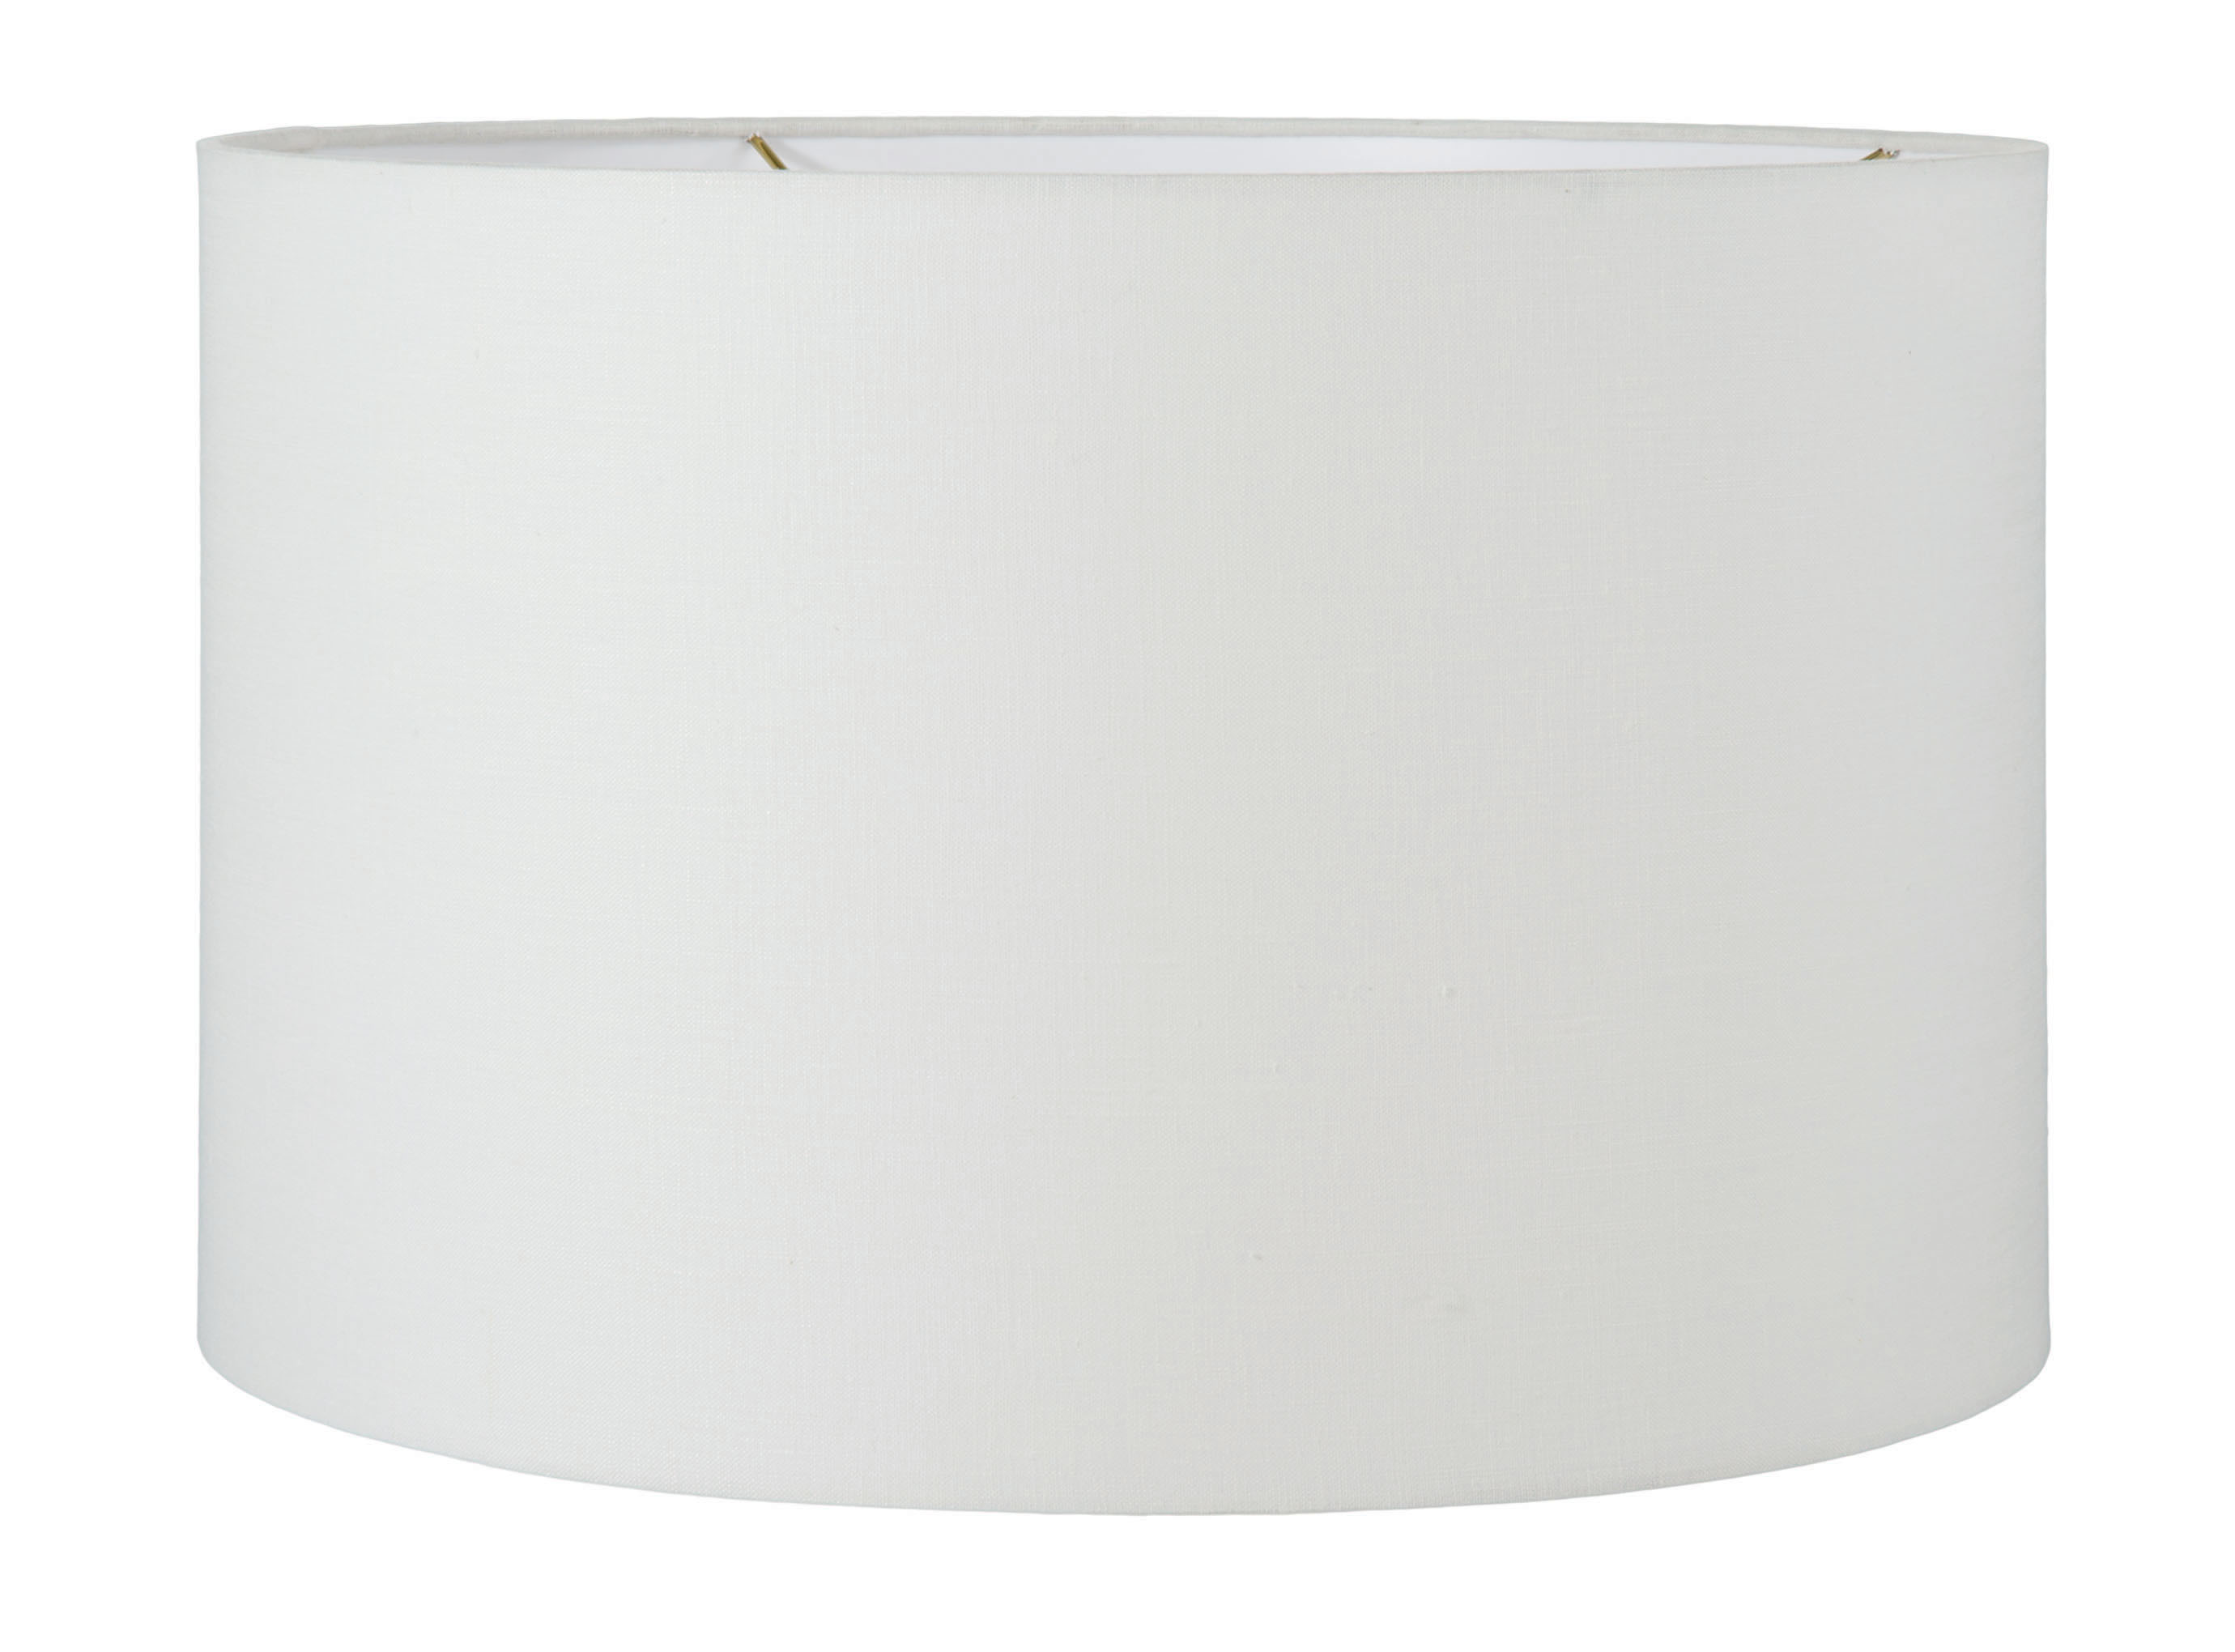 Off White Linen Drum Lampshade 05641f, Lamp Shade White Linen Drum